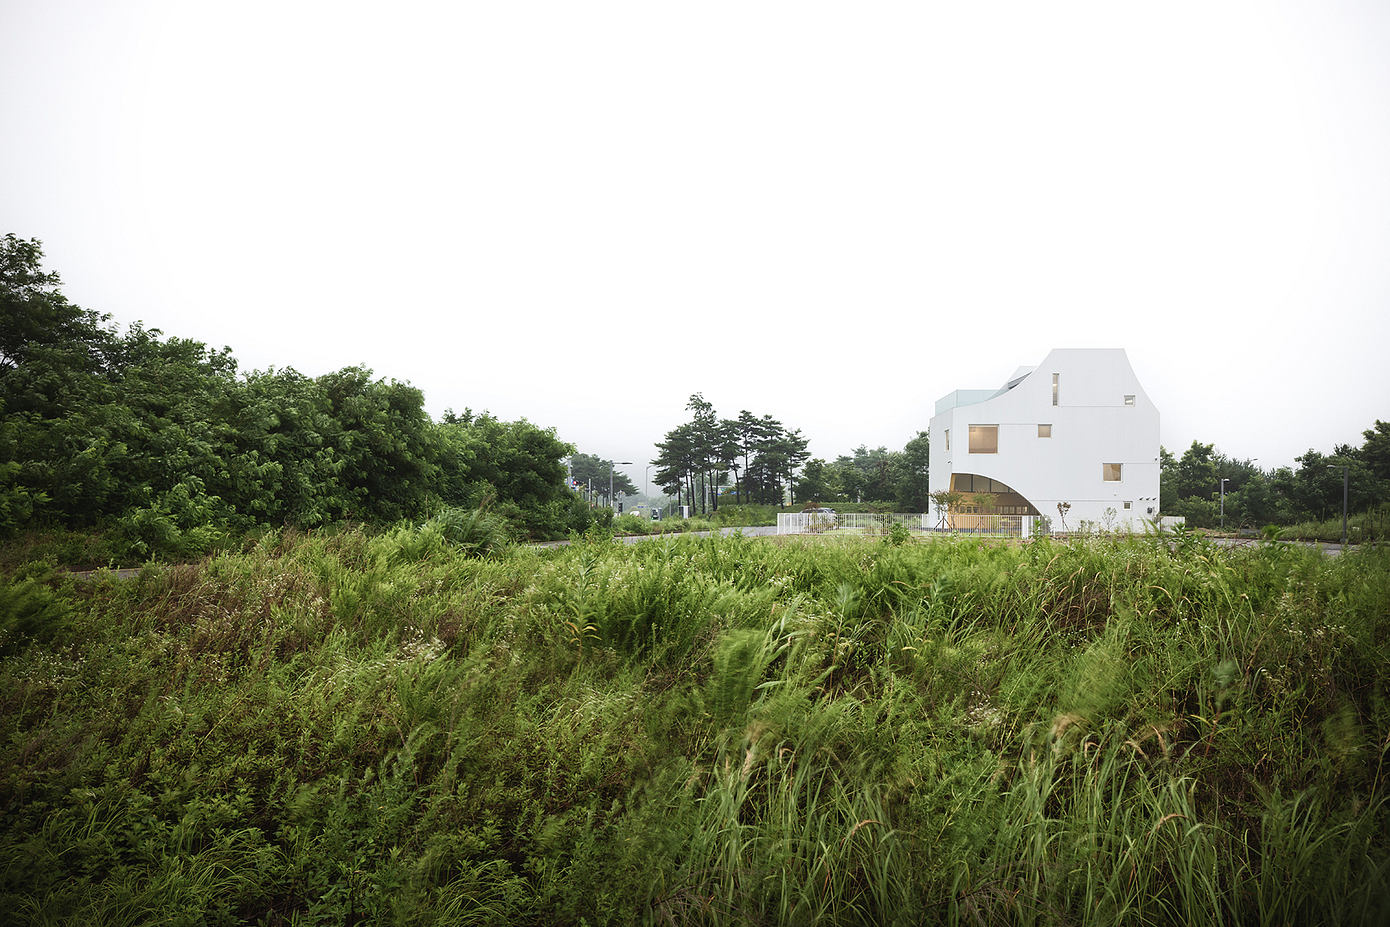 Sundial House: Minimalist South Korean Home Design